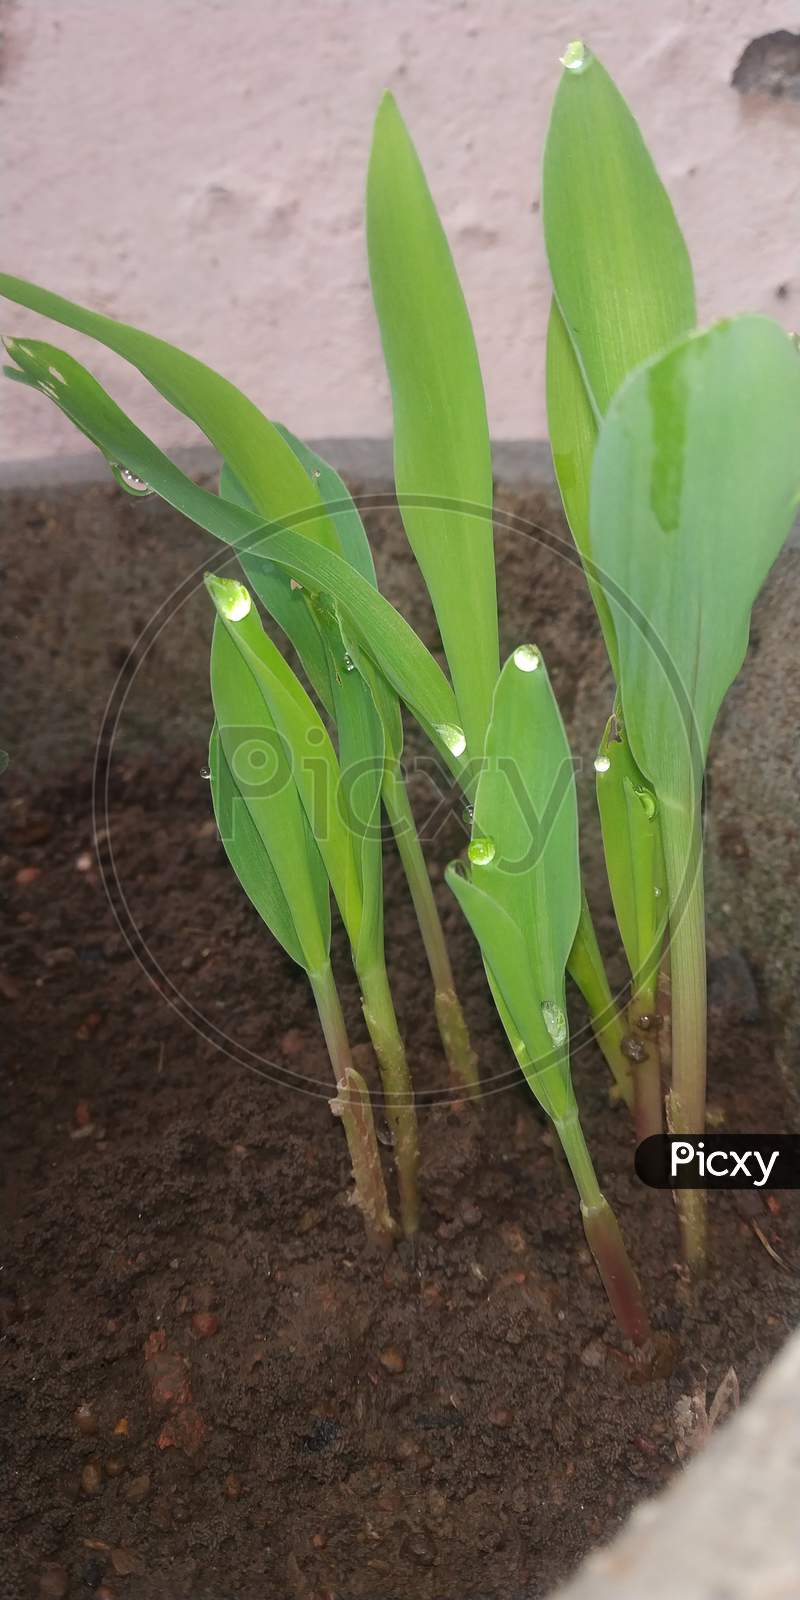 Plant of corn